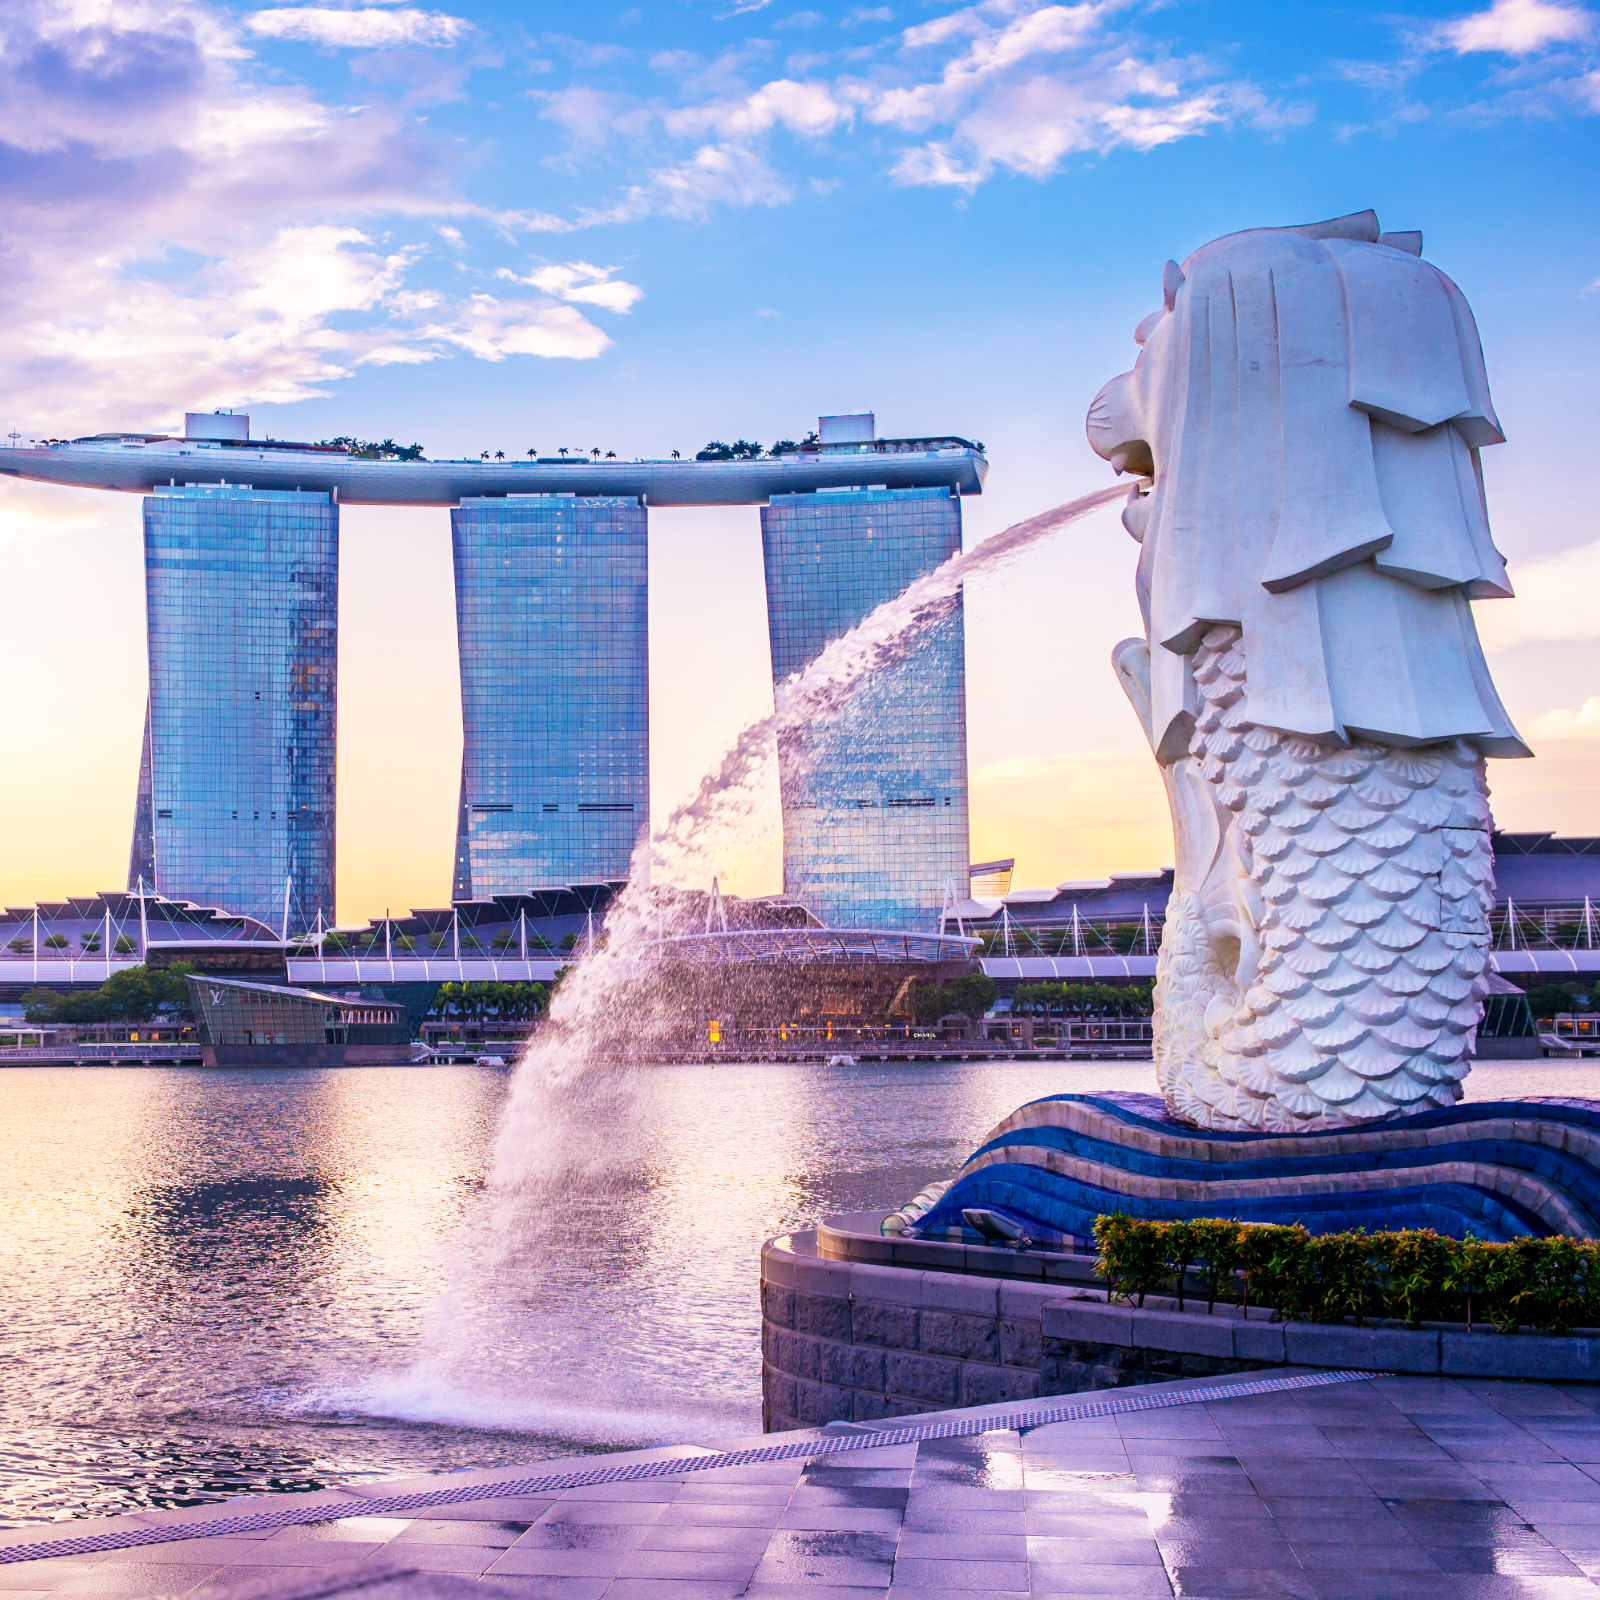 Singapore Warns Eight Unauthorized Token Exchanges